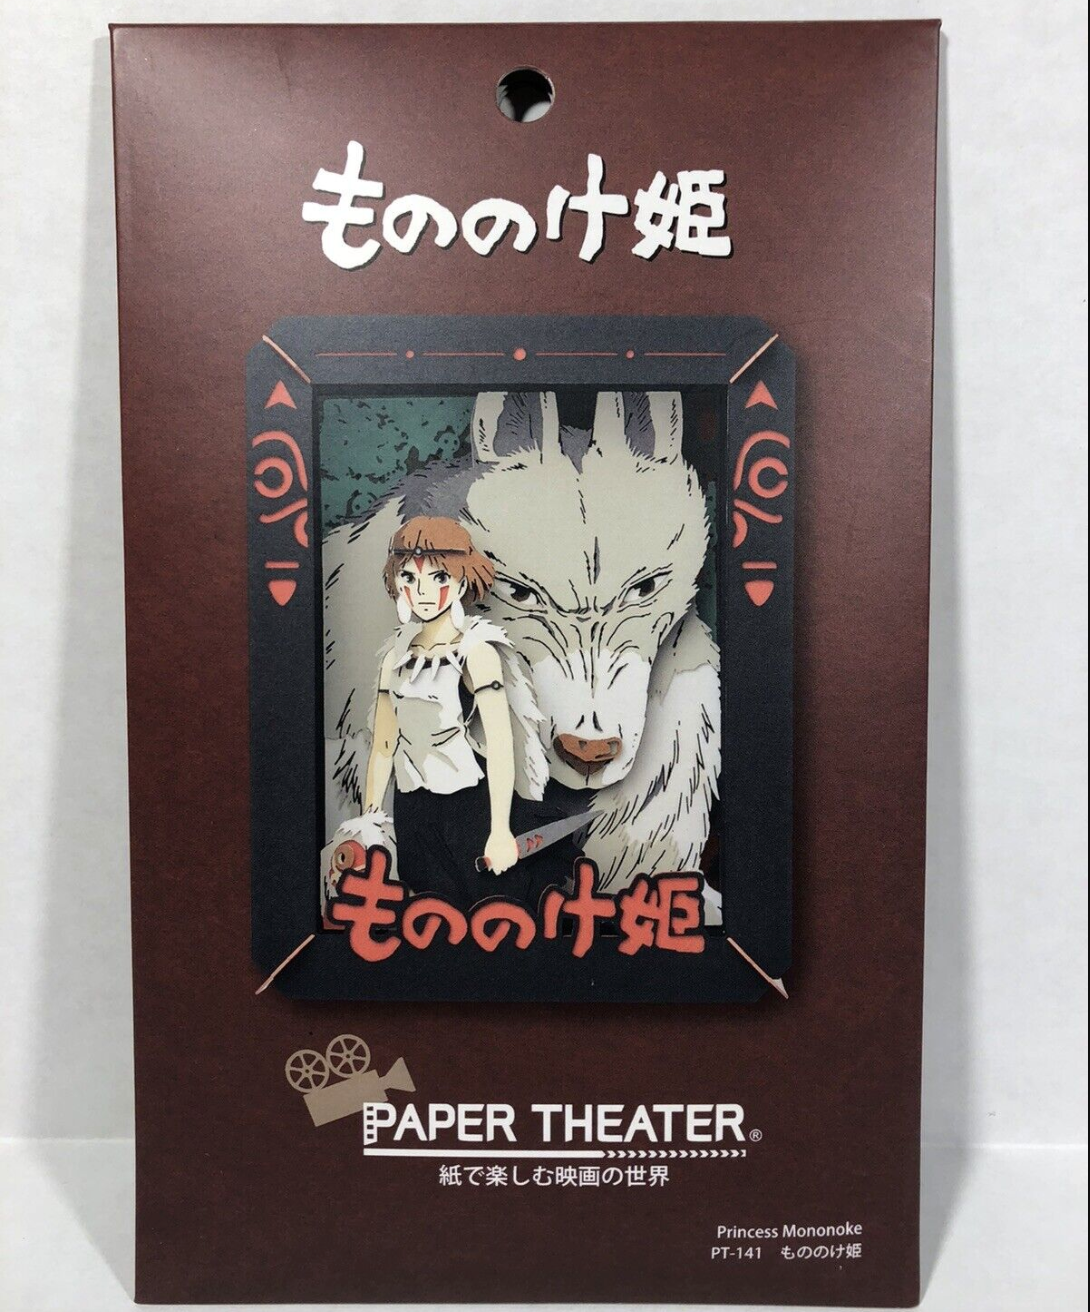 Studio Ghibli Paper Theater Cube ชุดงานฝีมือกระดาษคราฟท์